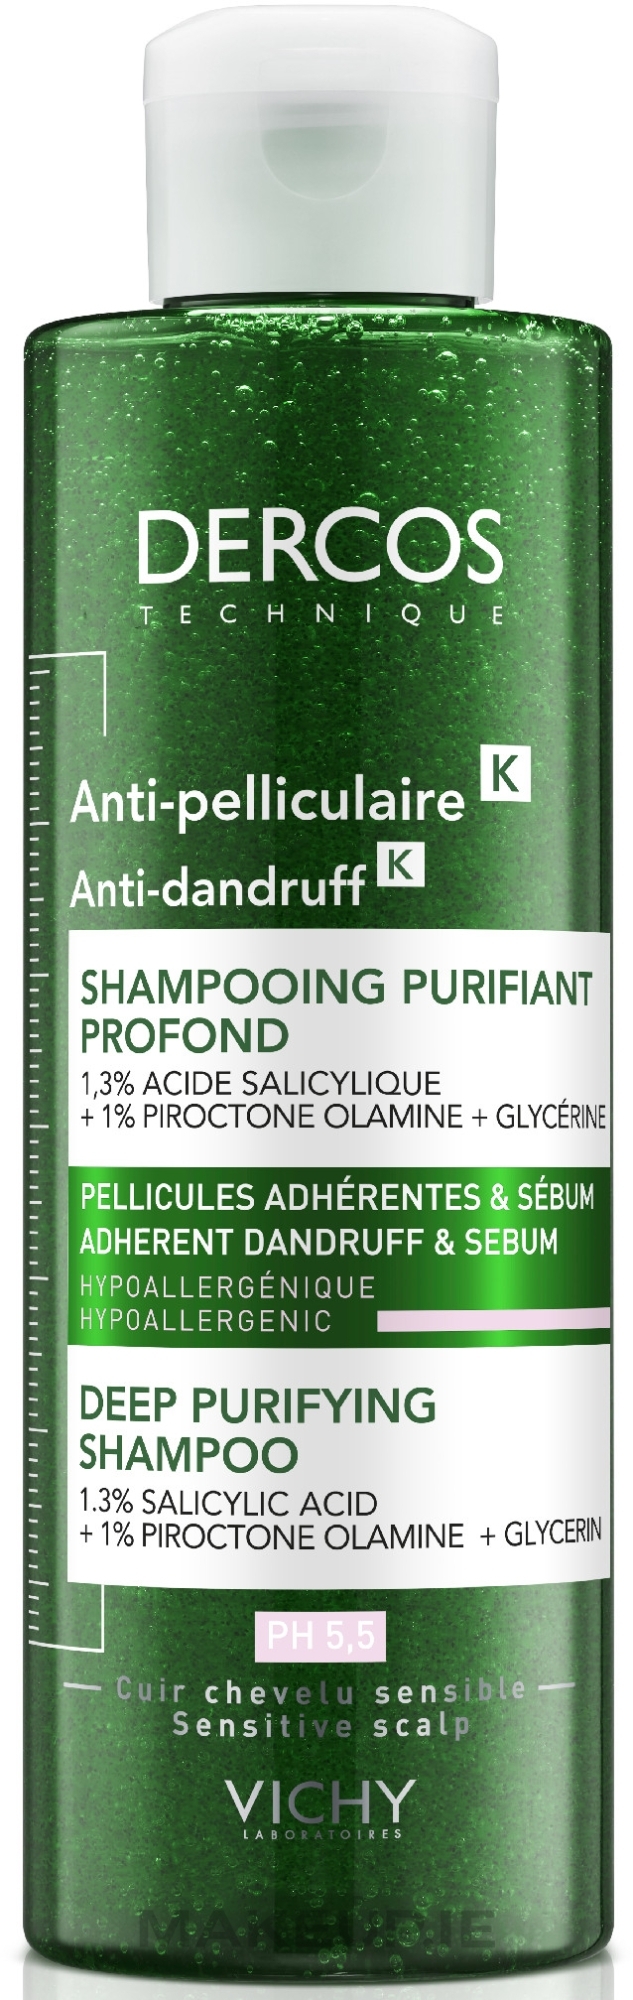 vichy anti cellular szampon